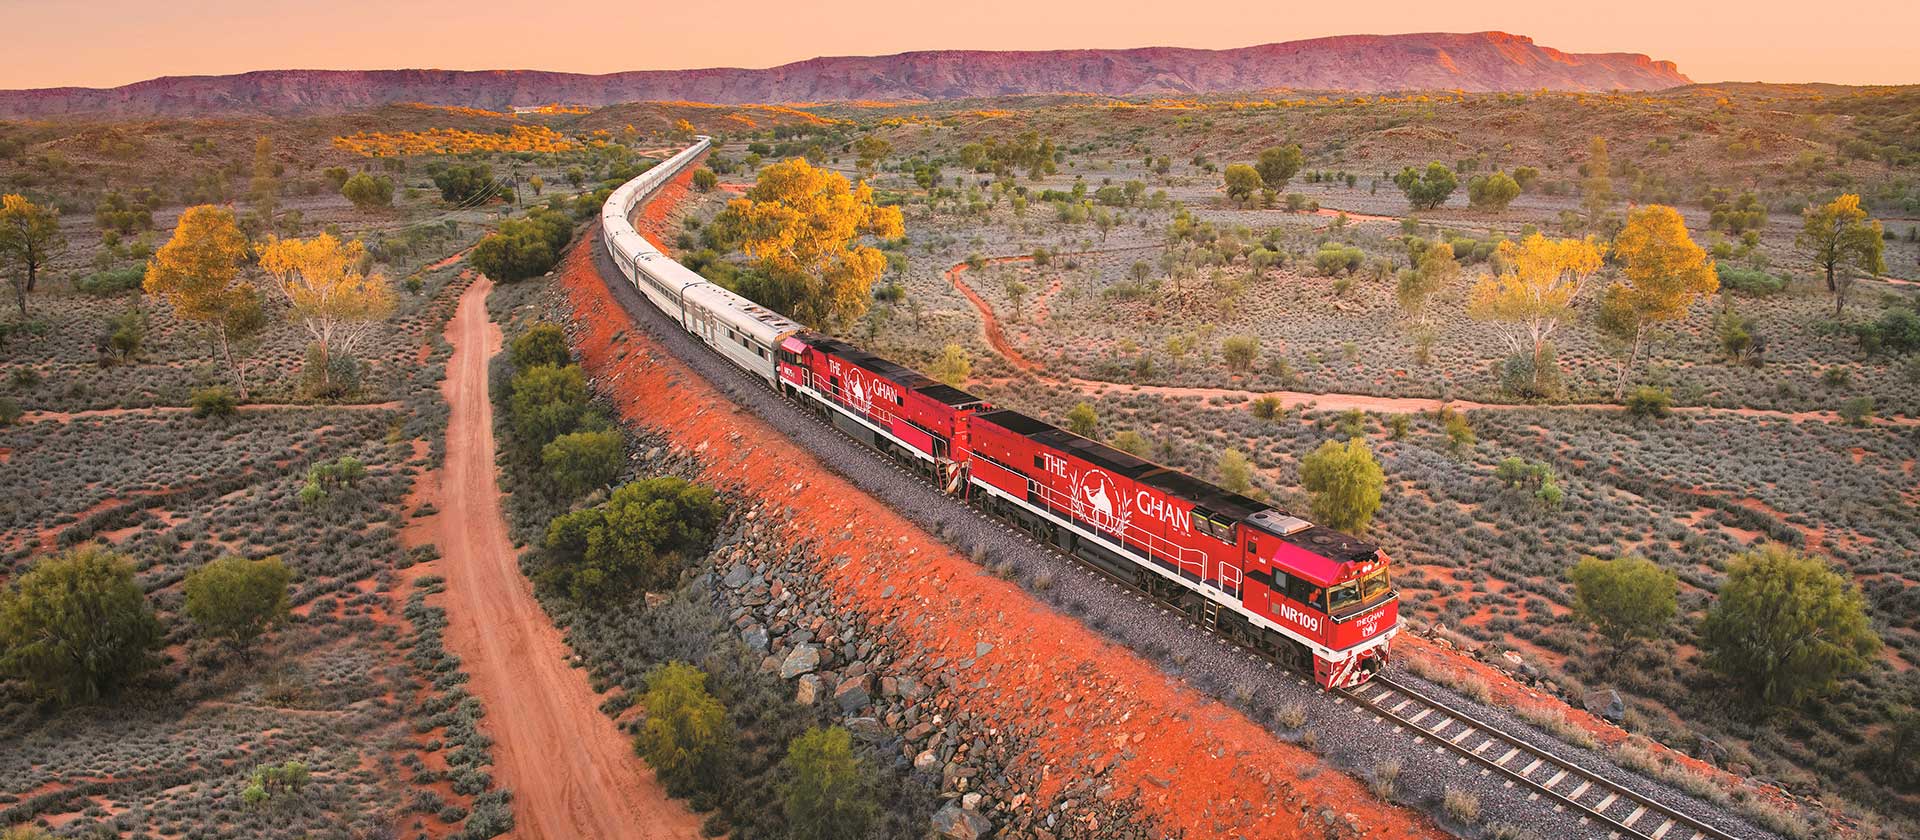 train travel holidays in australia